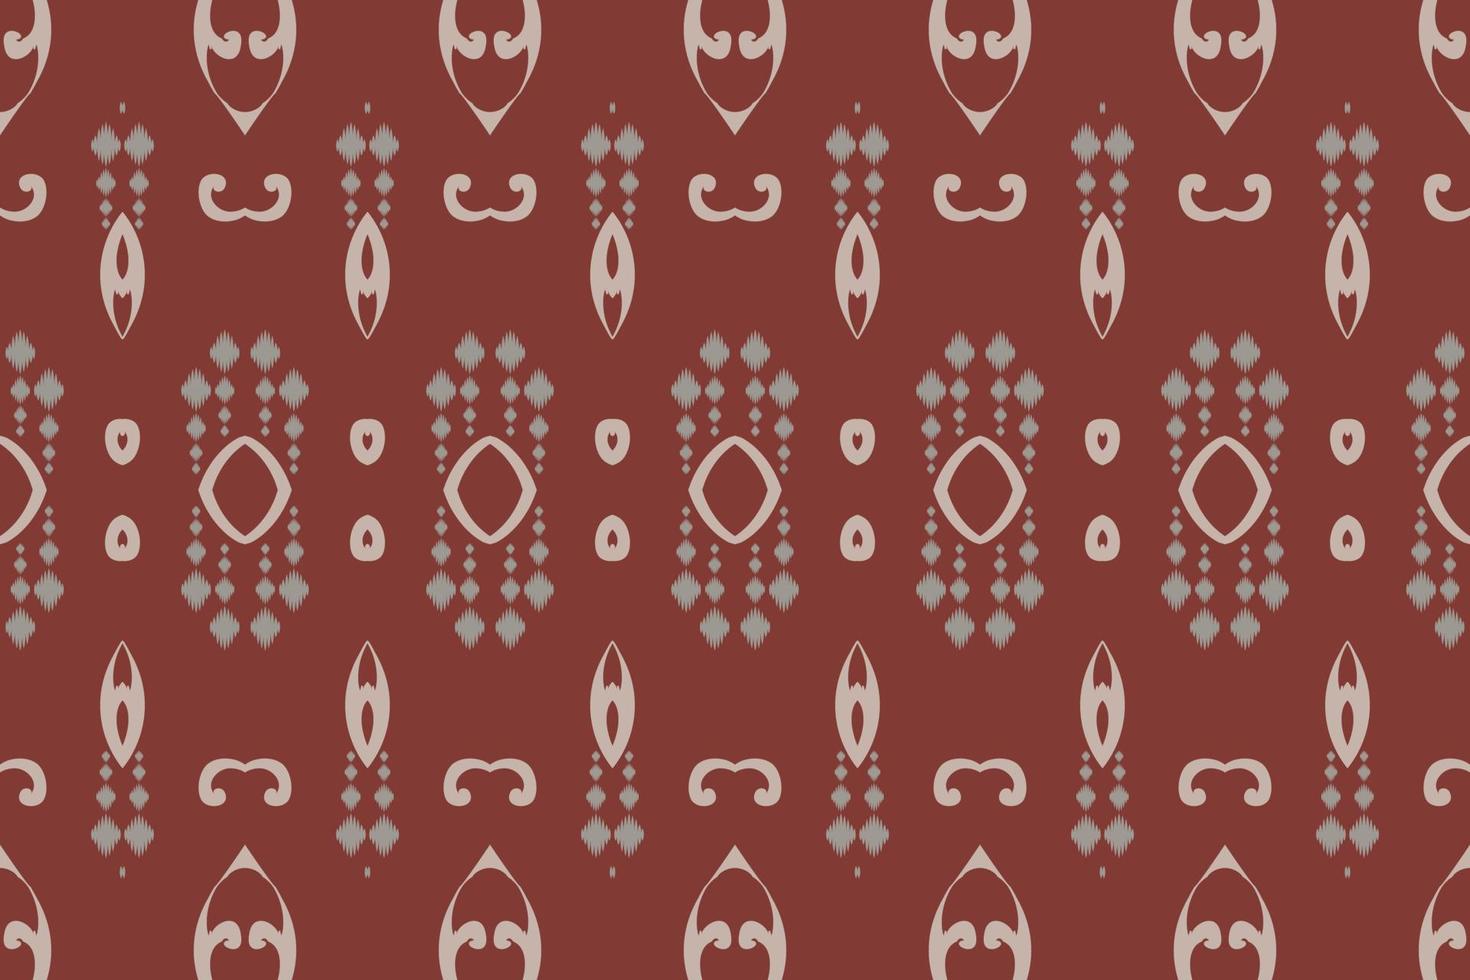 ikat diseña patrones tribales africanos sin fisuras. étnico geométrico ikkat batik vector digital diseño textil para estampados tela sari mughal cepillo símbolo franjas textura kurti kurtis kurtas